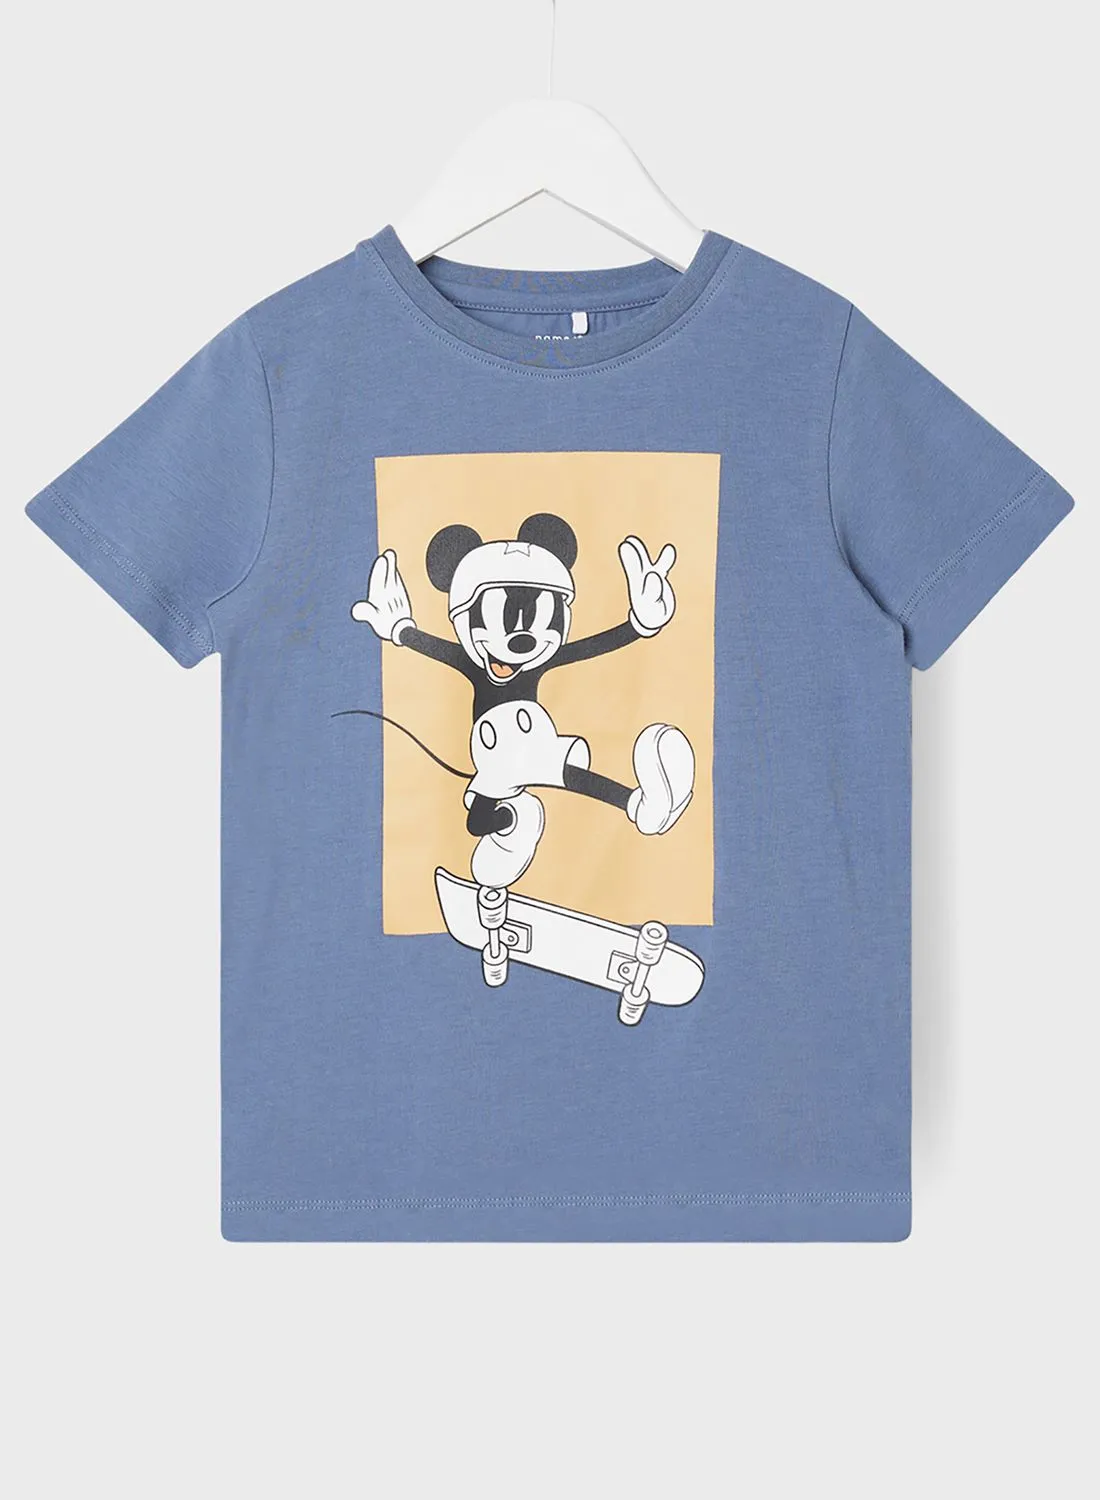 NAME IT Kids Graphic T-Shirt